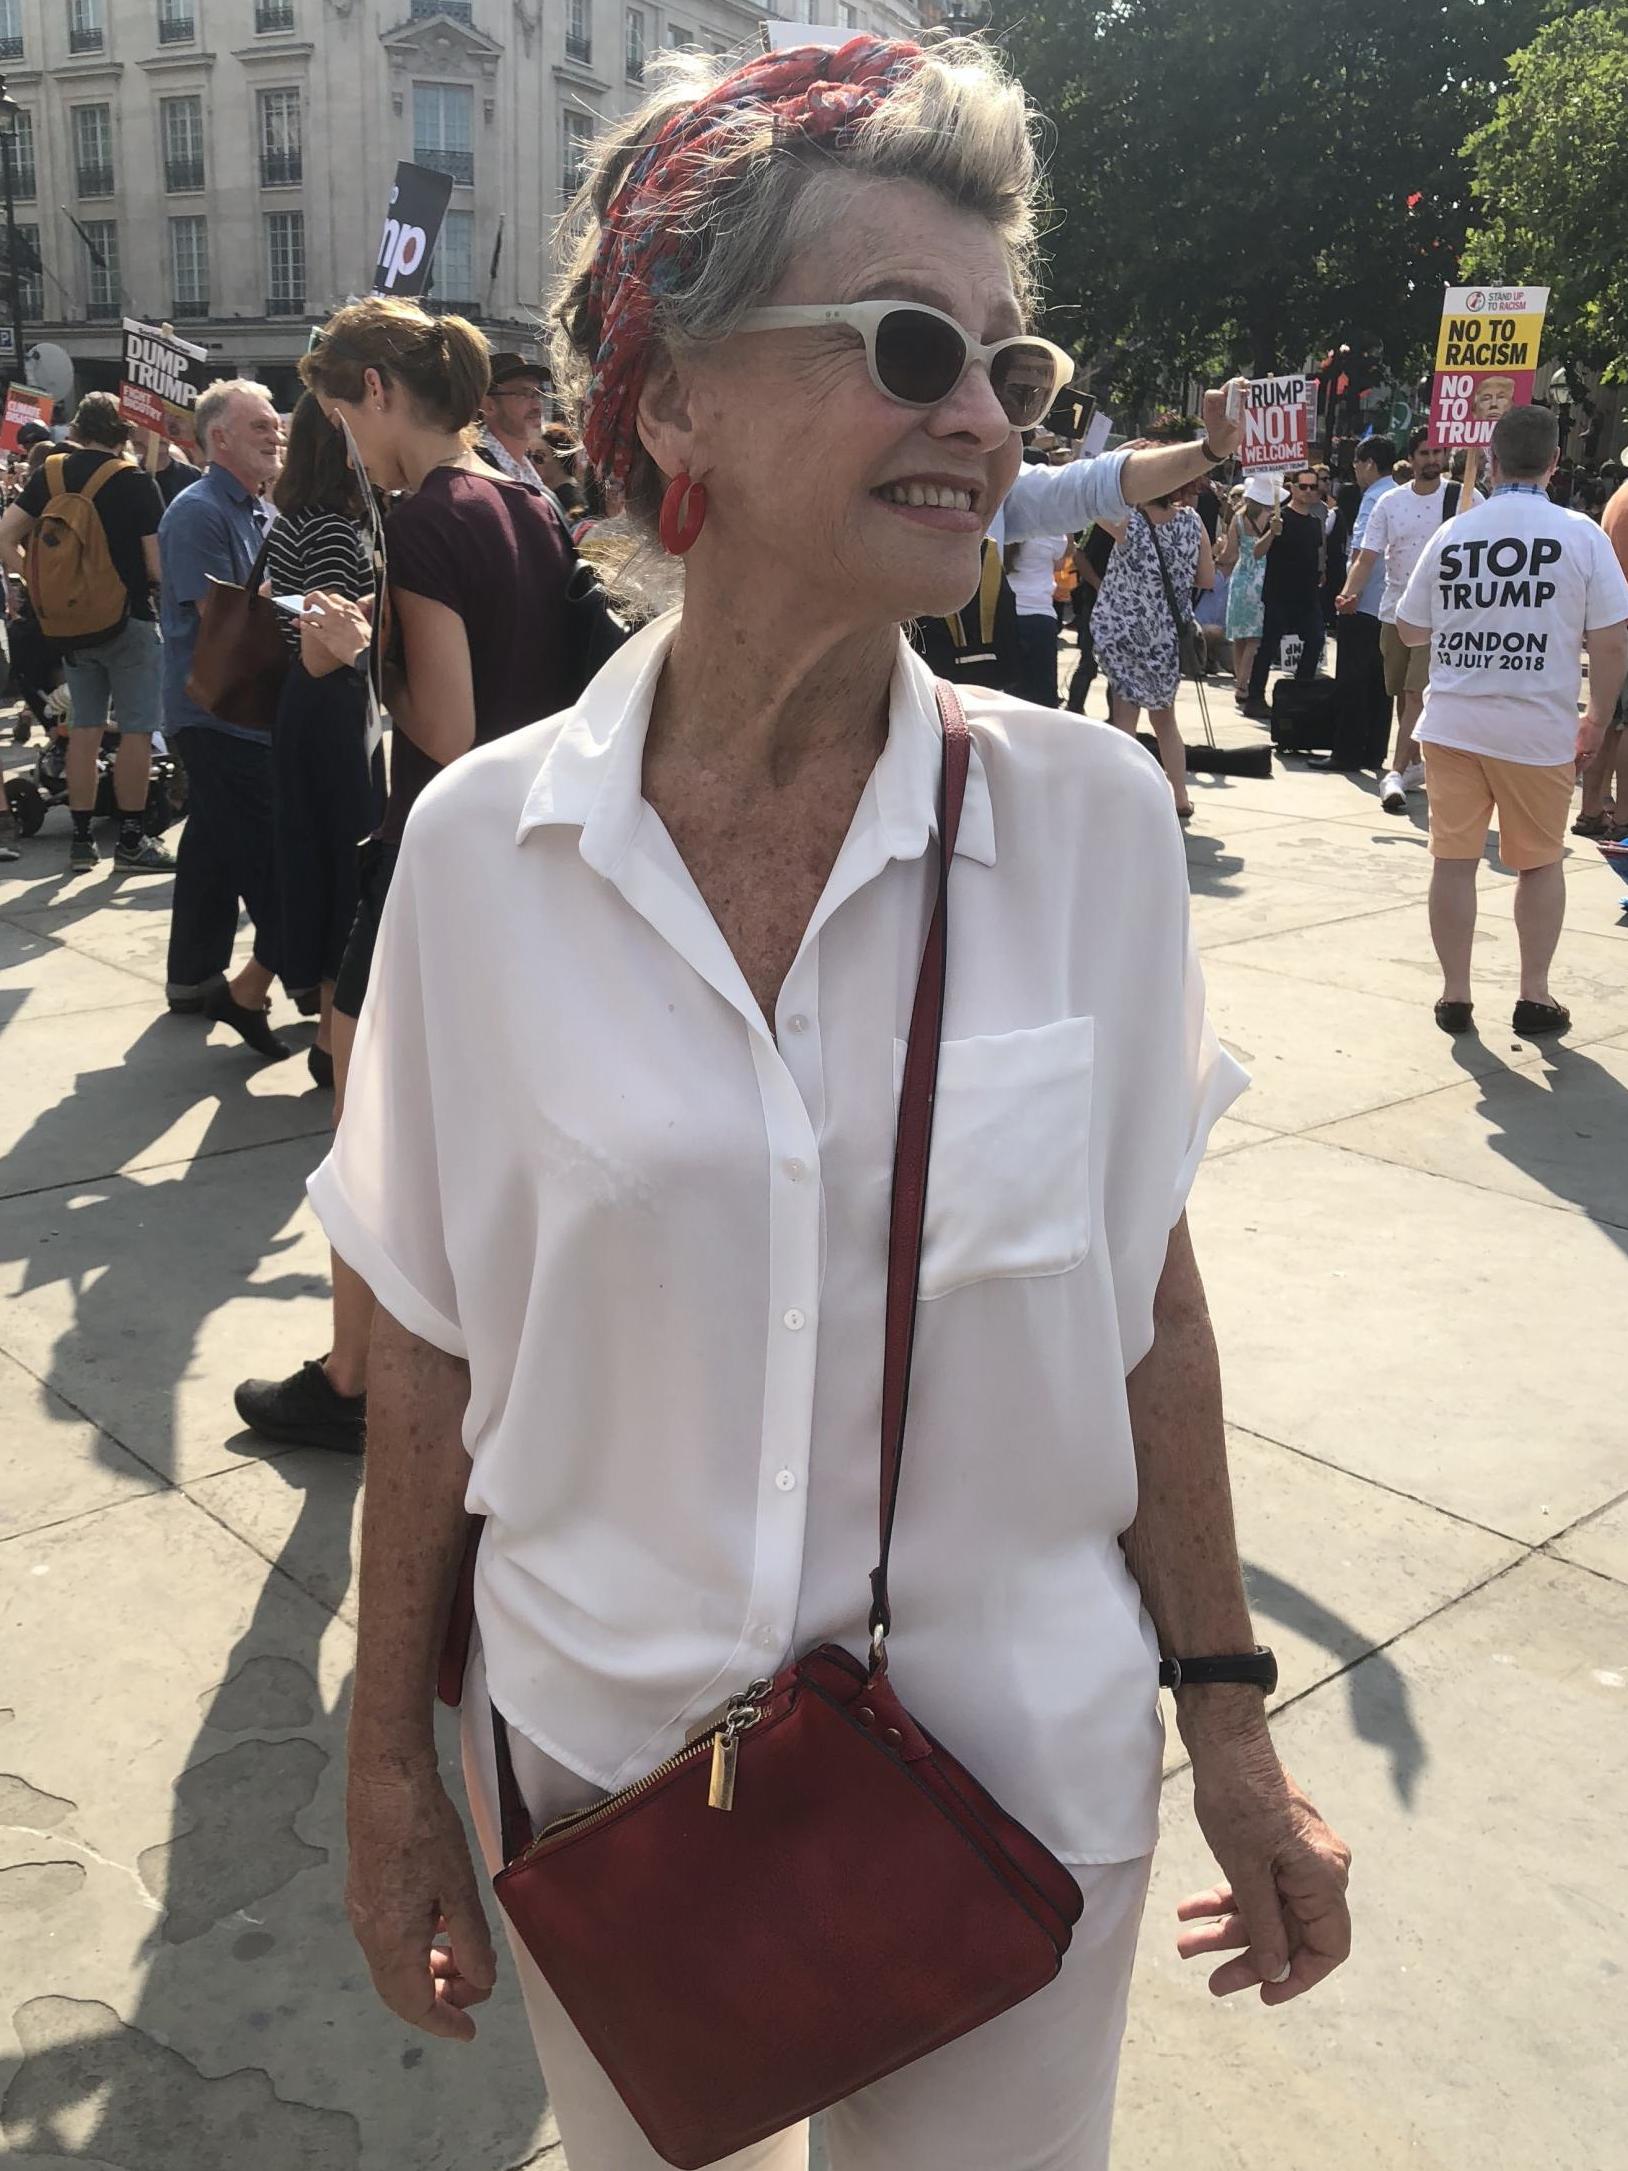 BAFTA-winning actor, Julie Cristie watches the rally at Trafalgar Square